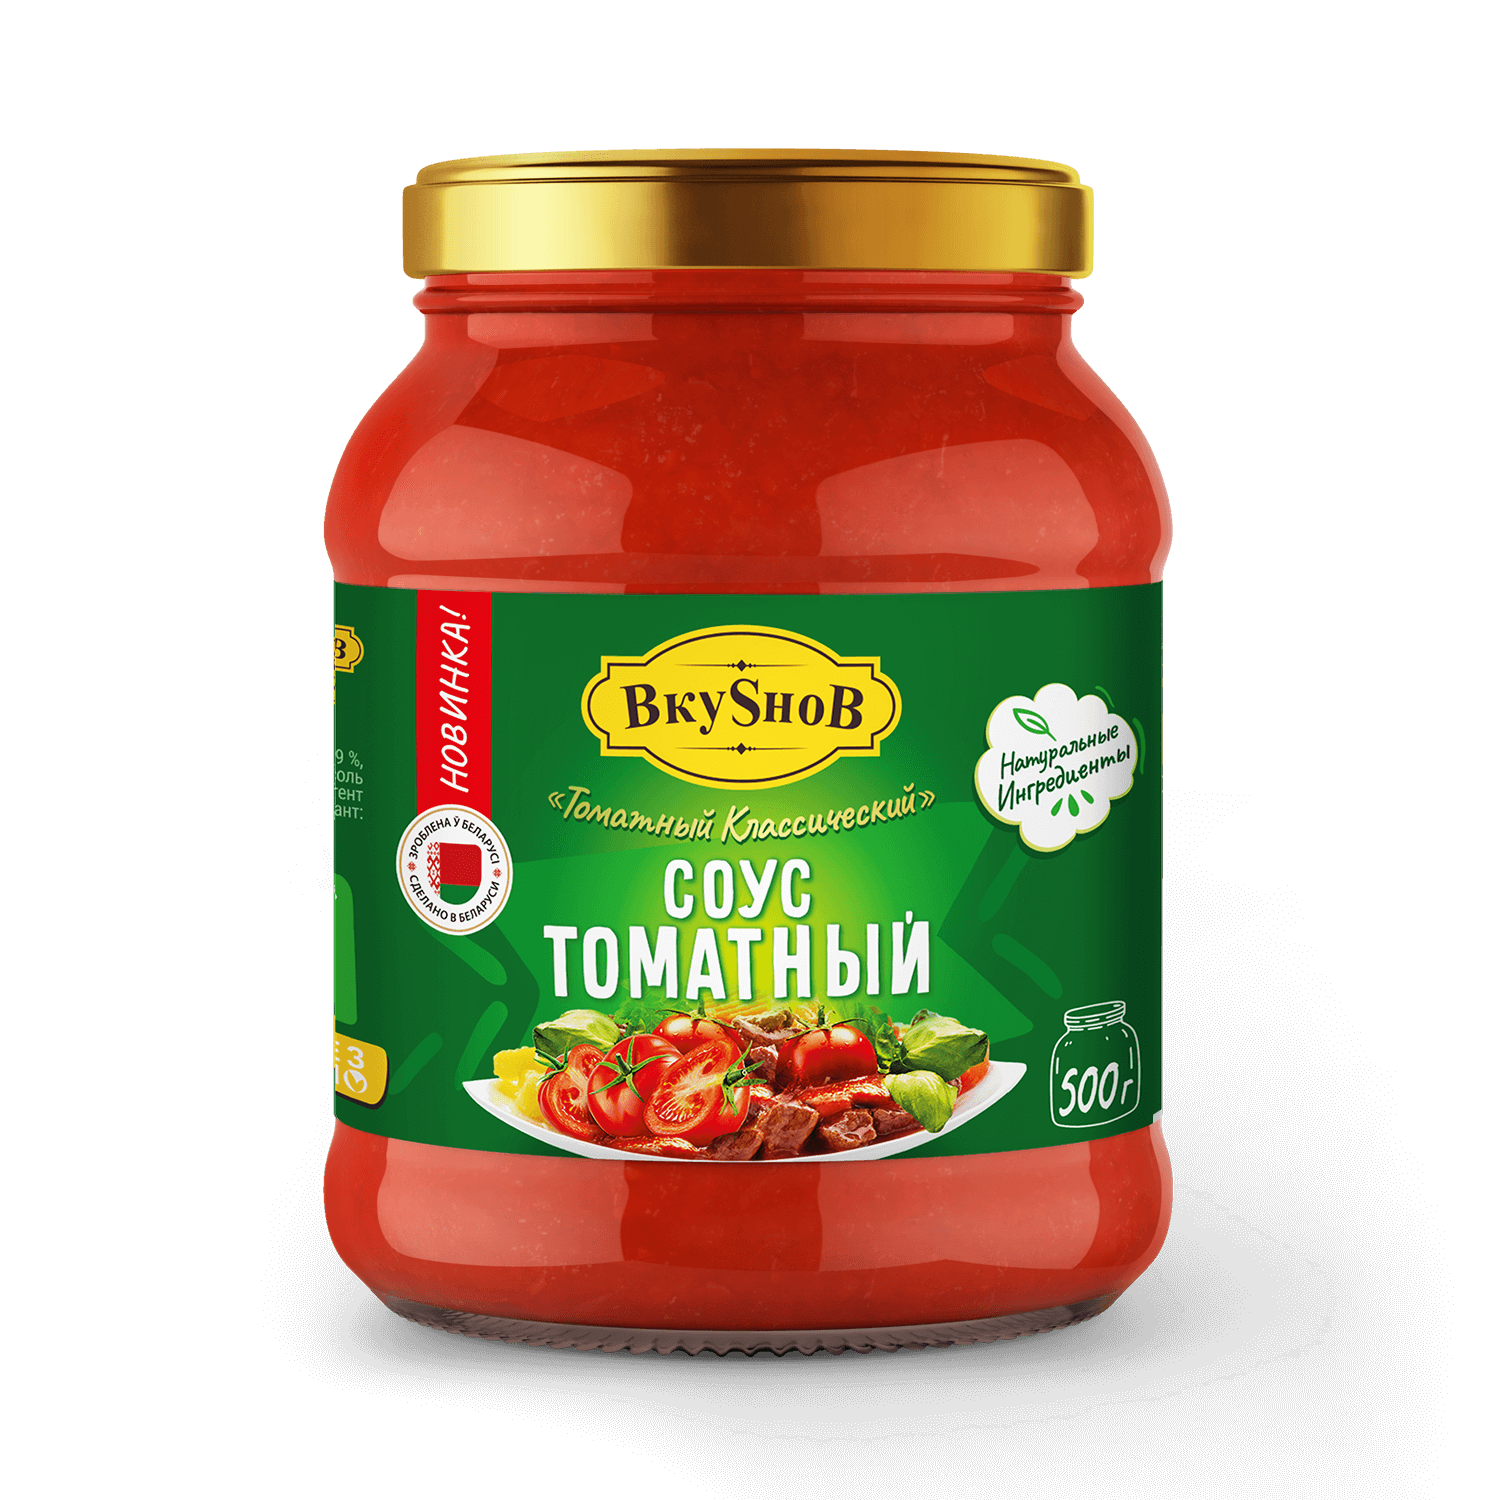 Tomato sauce “Tomatny classic”